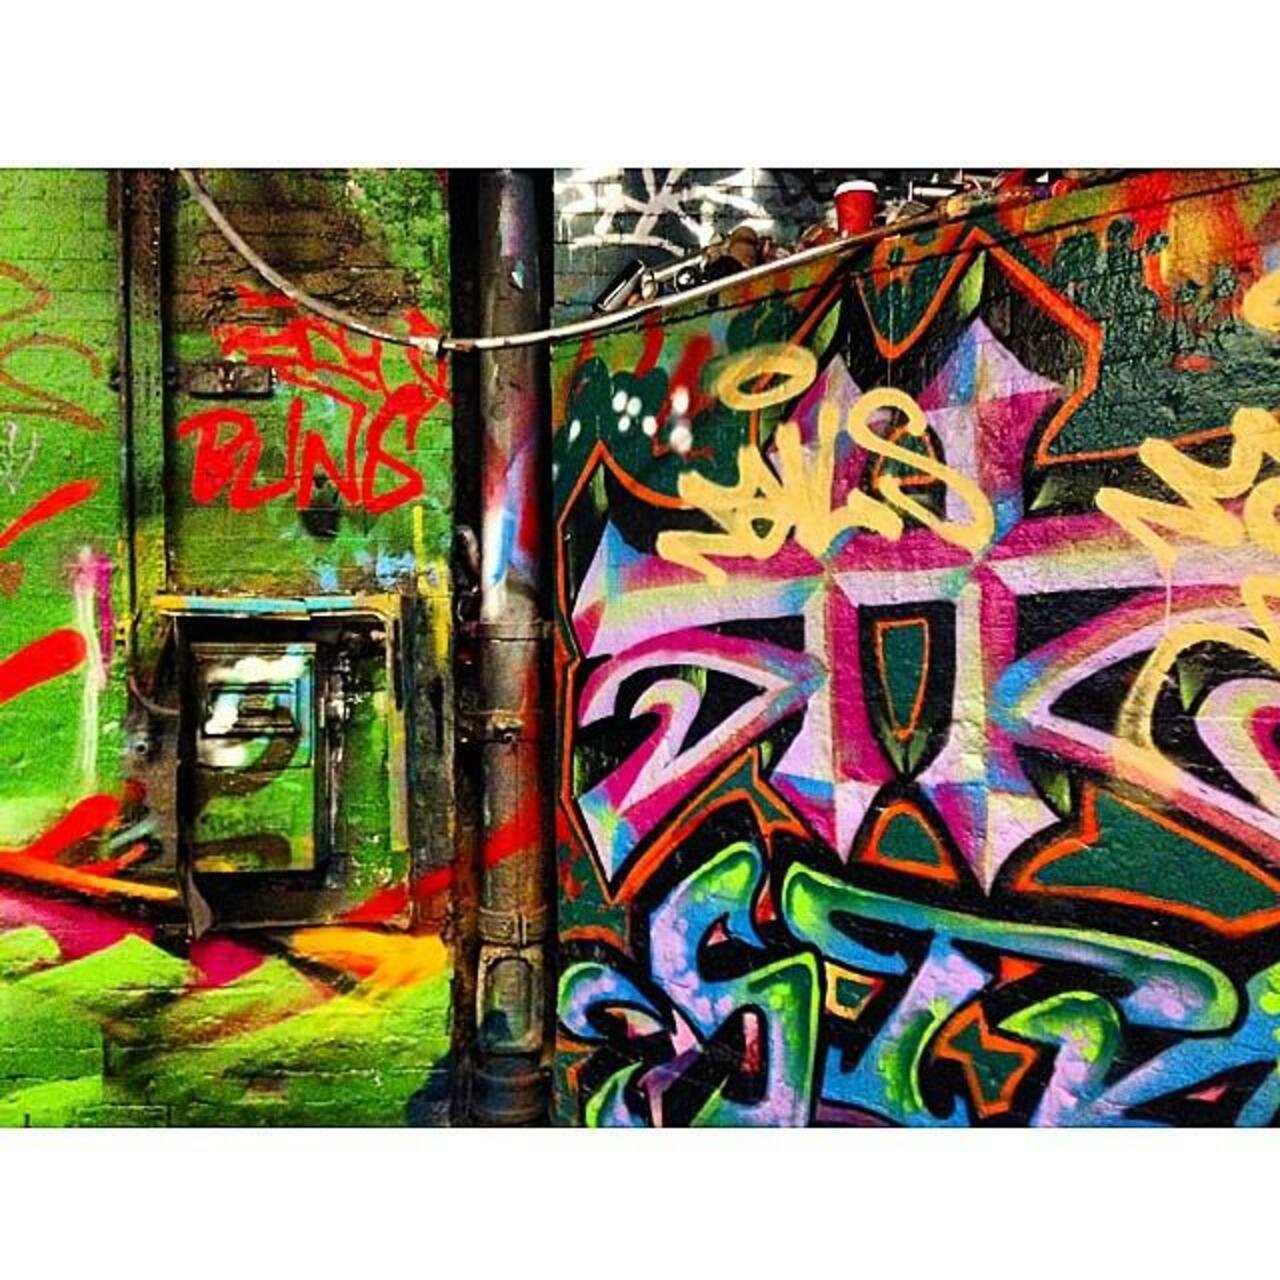 #banksytunnel #graffiti #graffititunnel #leakestreet #waterloo #streetart #streetartlondon #mural #electricitybox #… http://t.co/UO1QdFZqXG